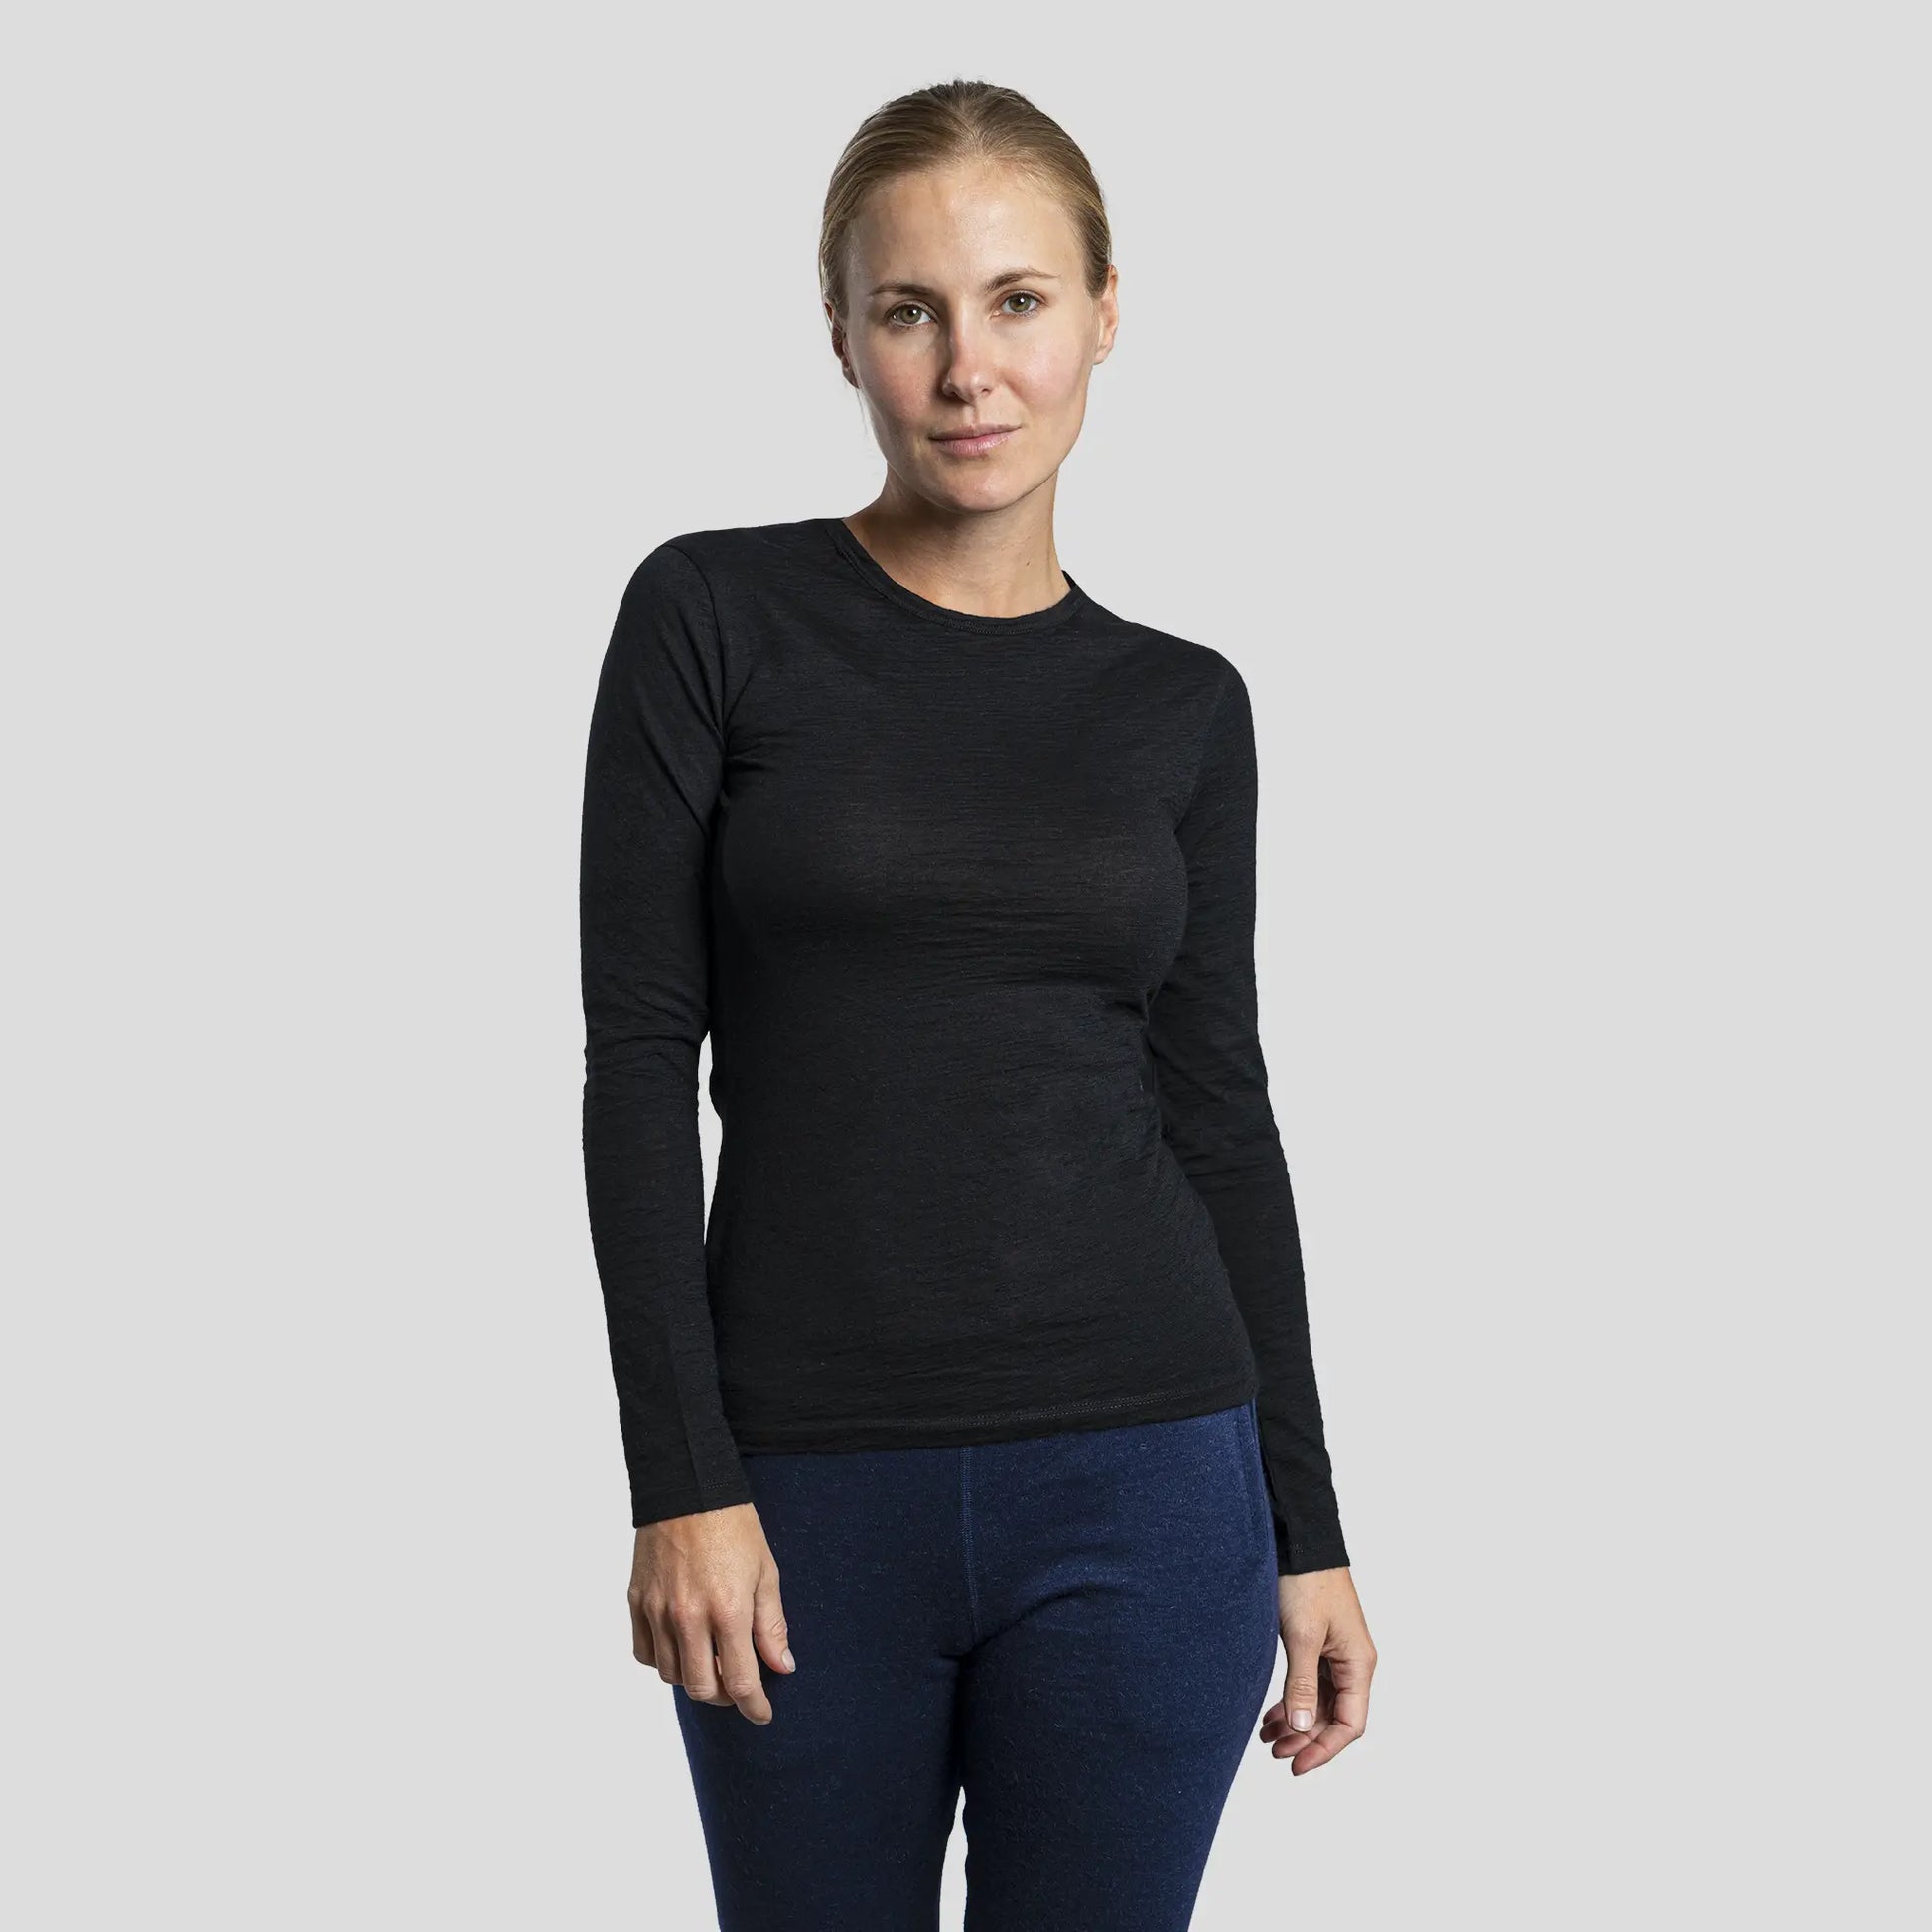 Womens 100% Organic Cotton Long Sleeve Shirt - Made in USA